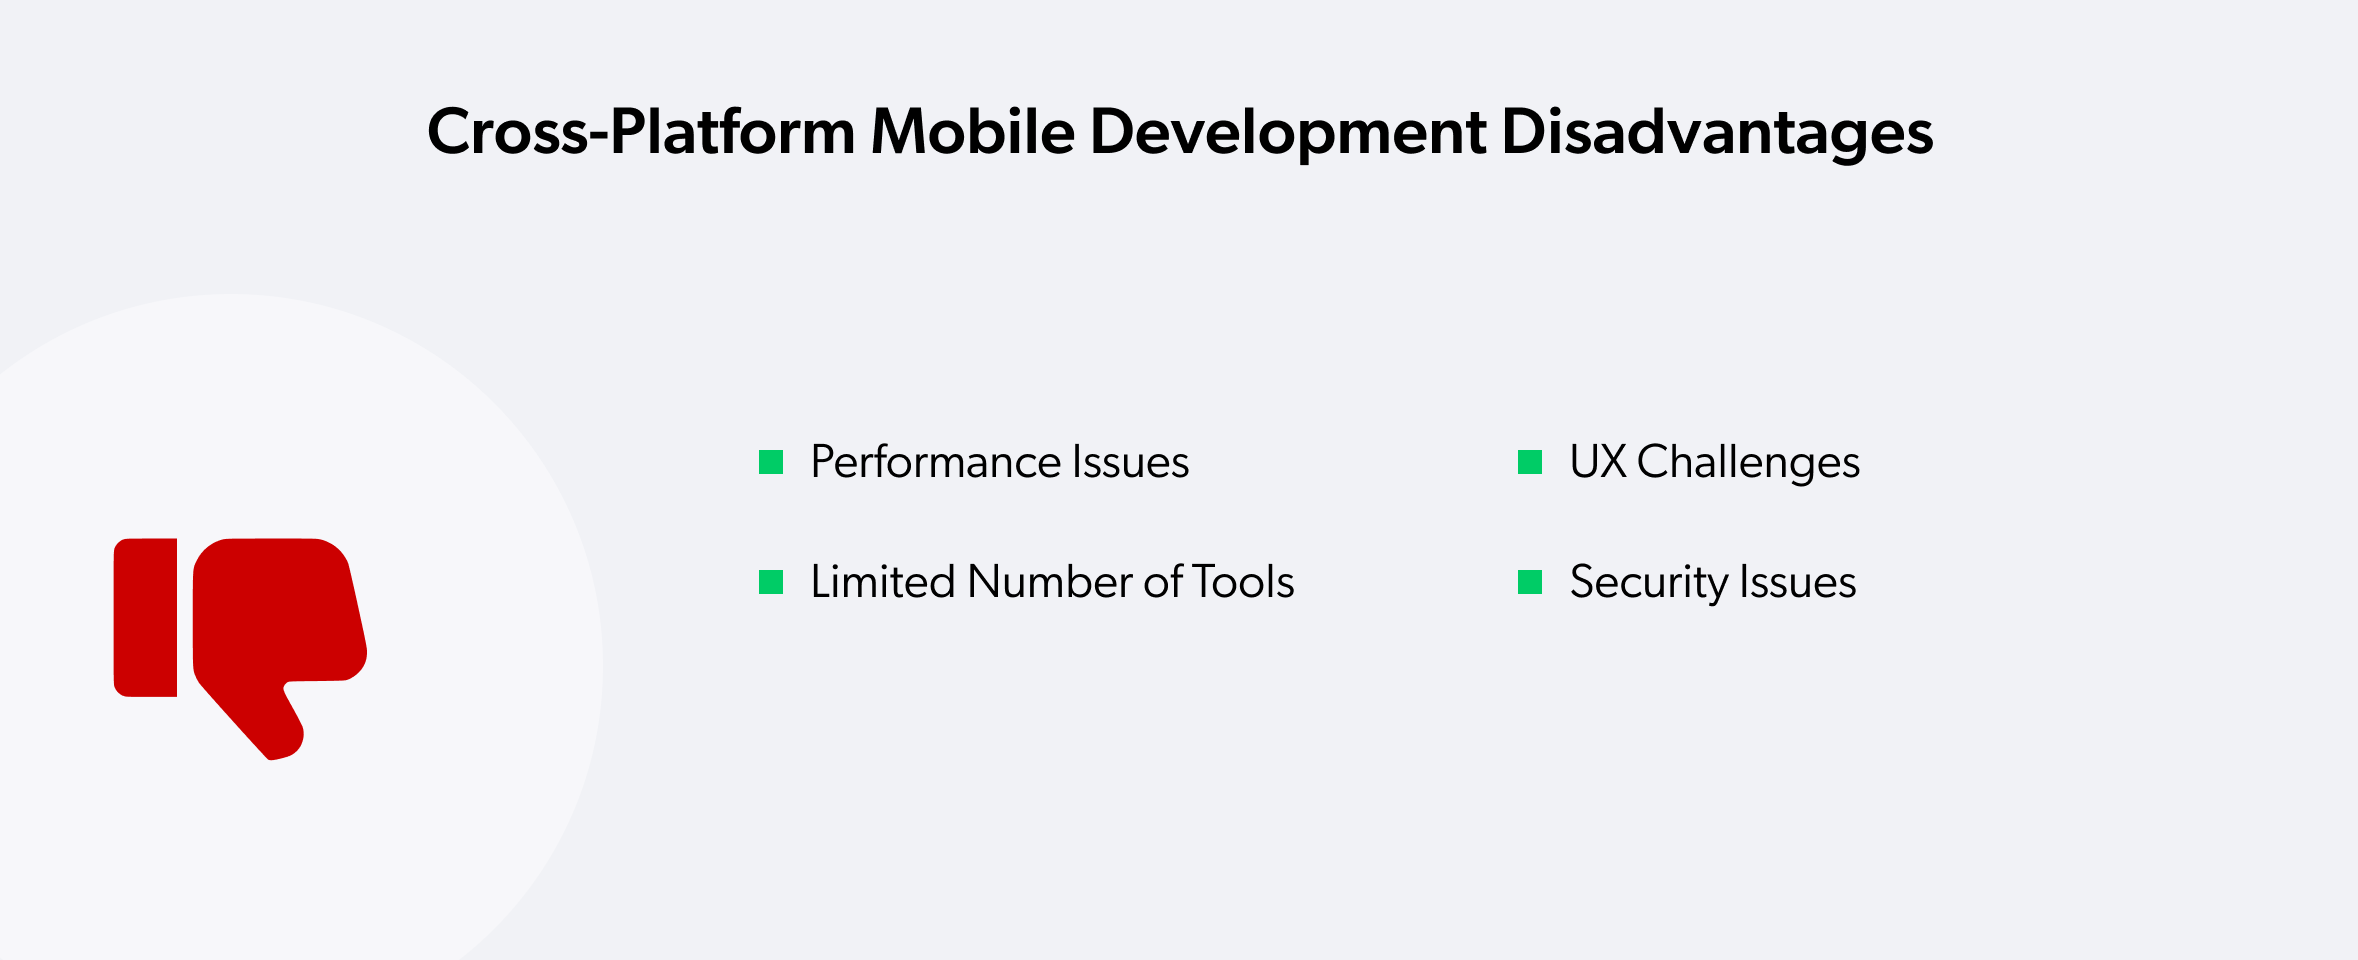 Cross-Platform Mobile Development Disadvantages